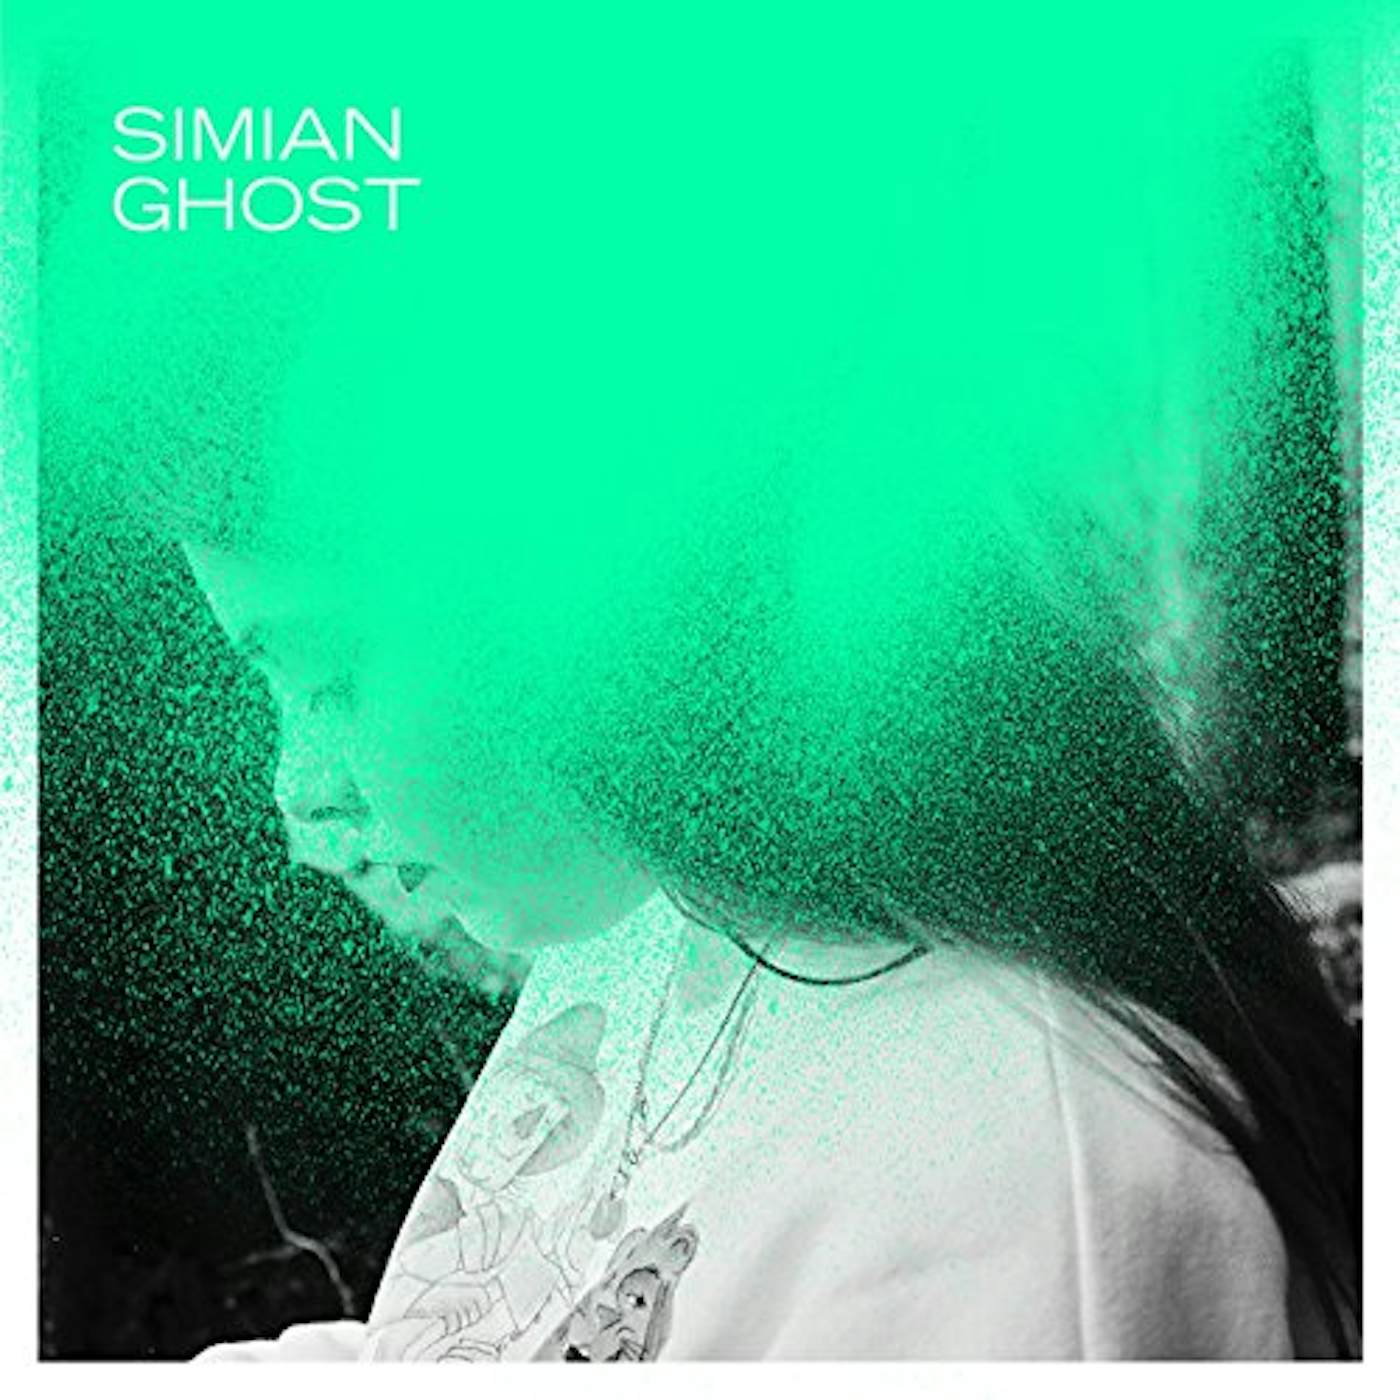 Simian Ghost Vinyl Record